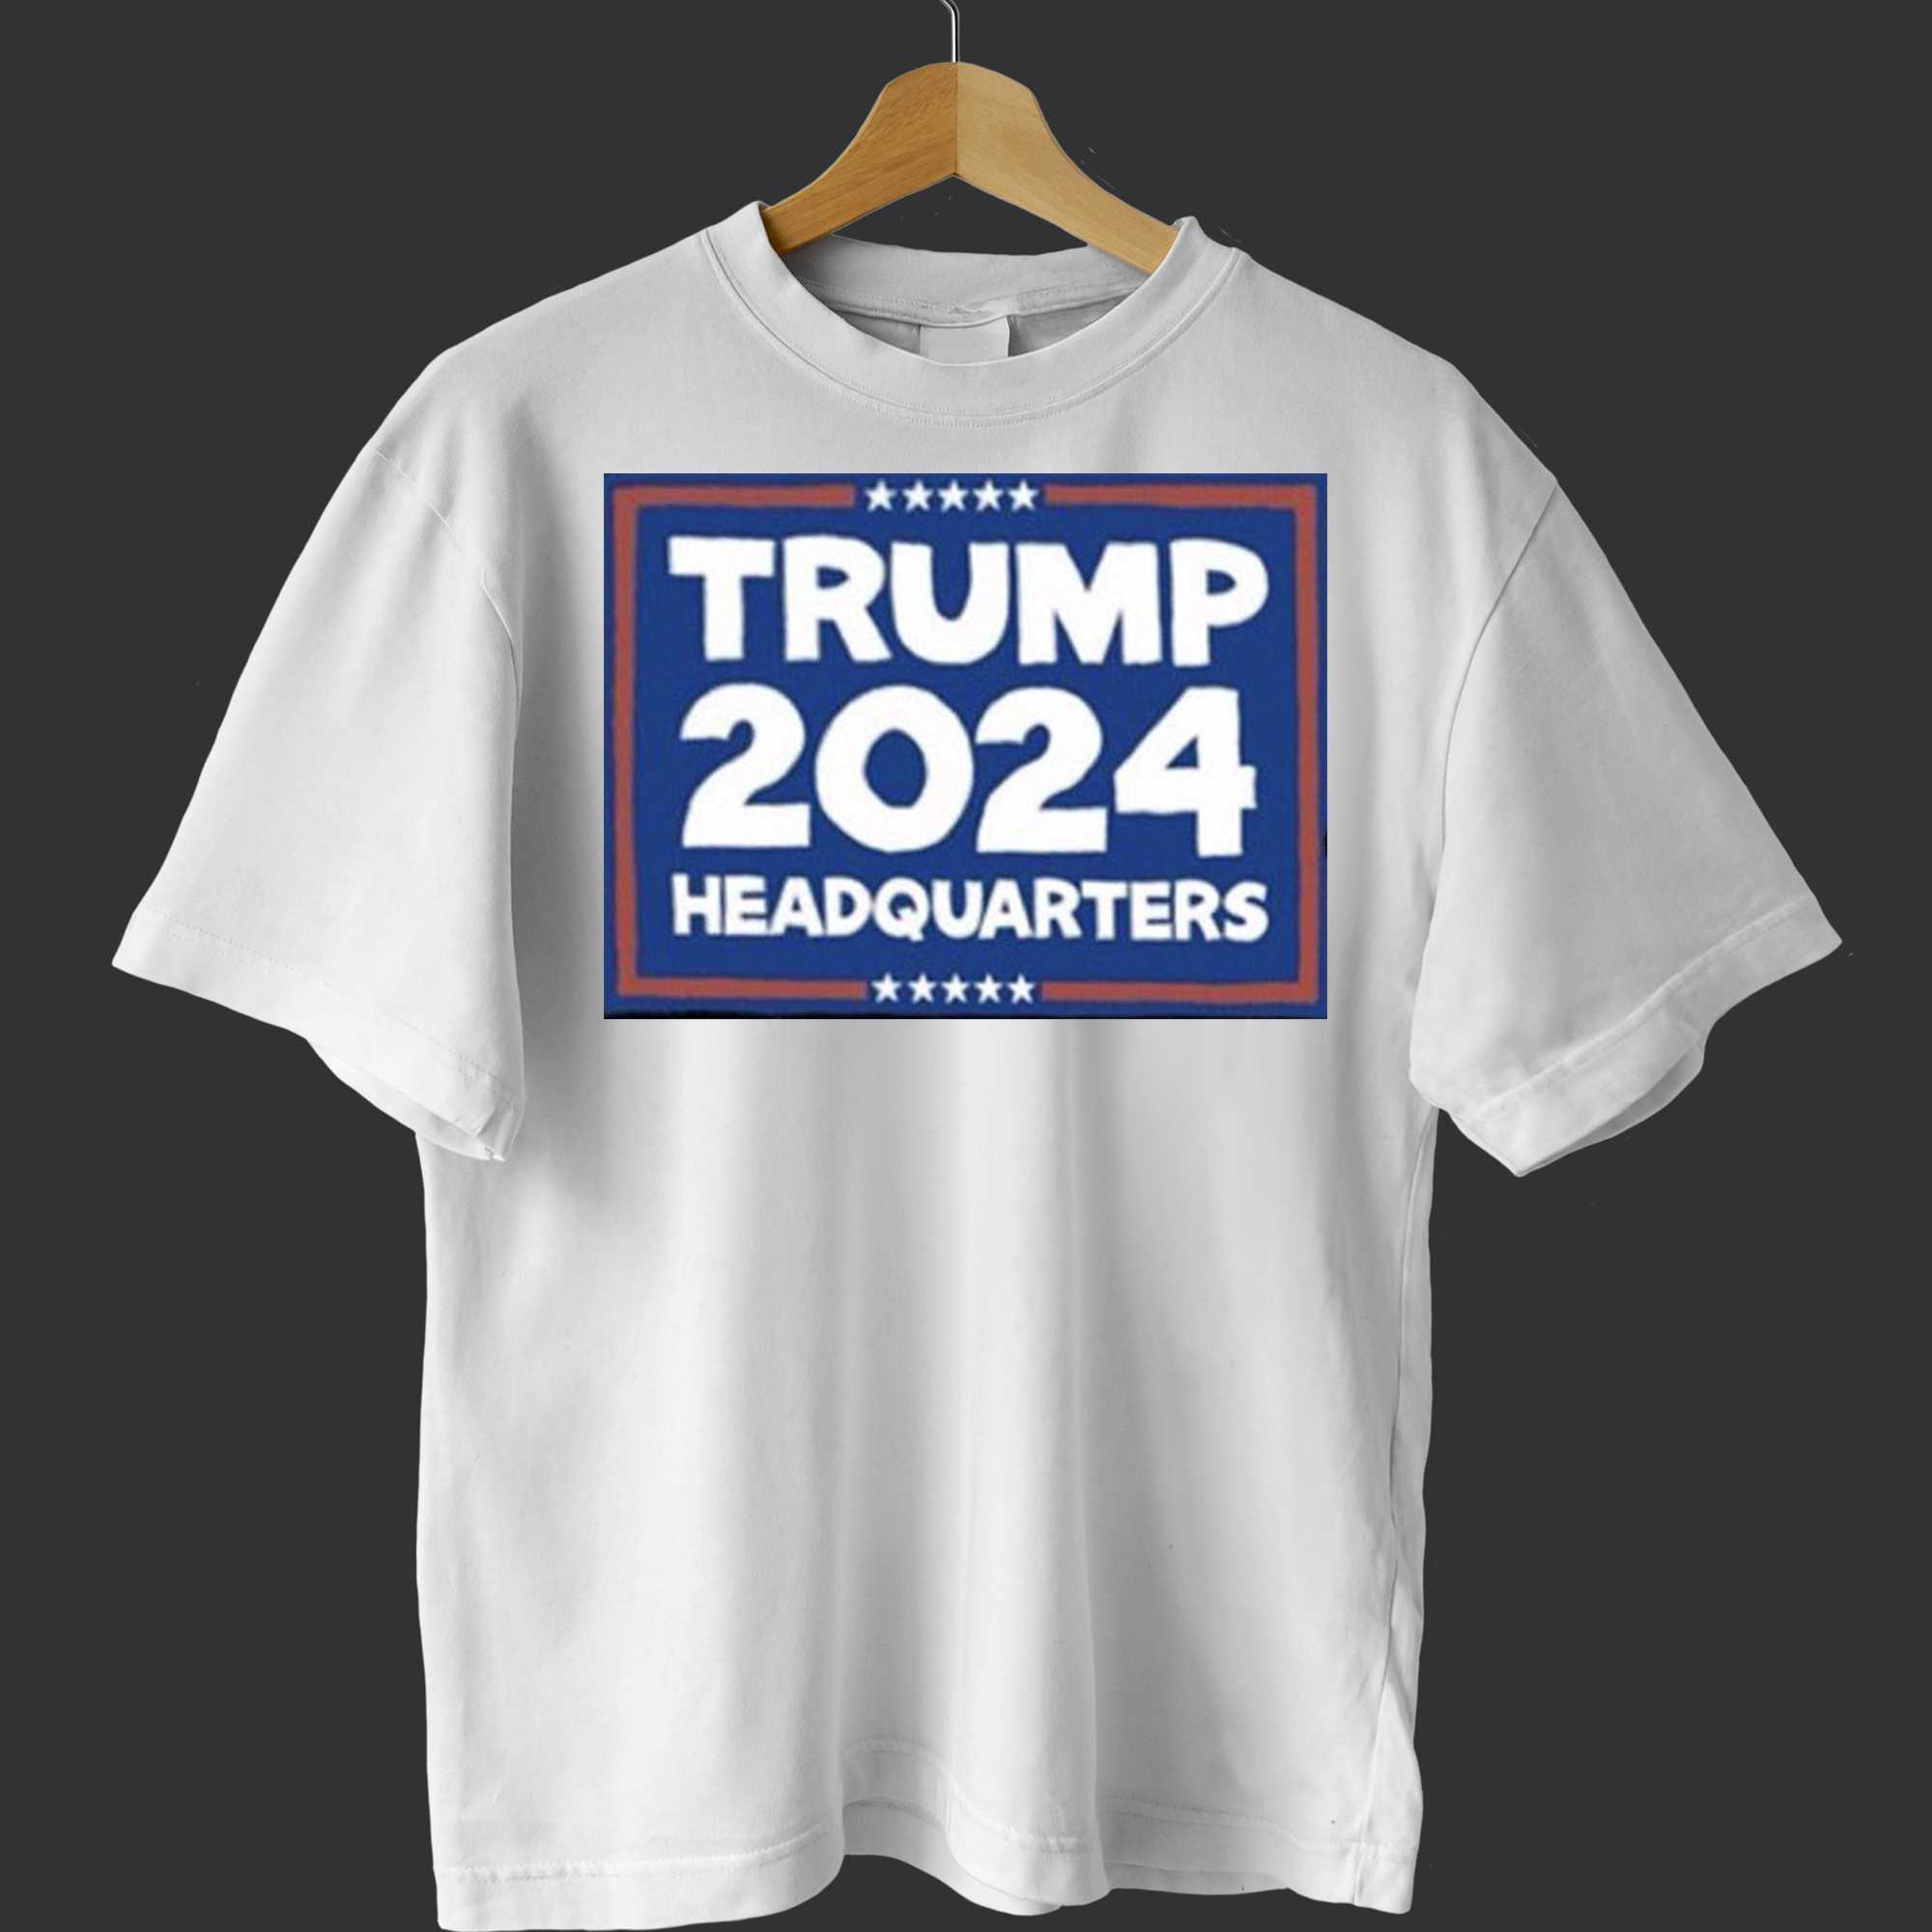 Trump 2024 Headquarters Shirt Shibtee Clothing